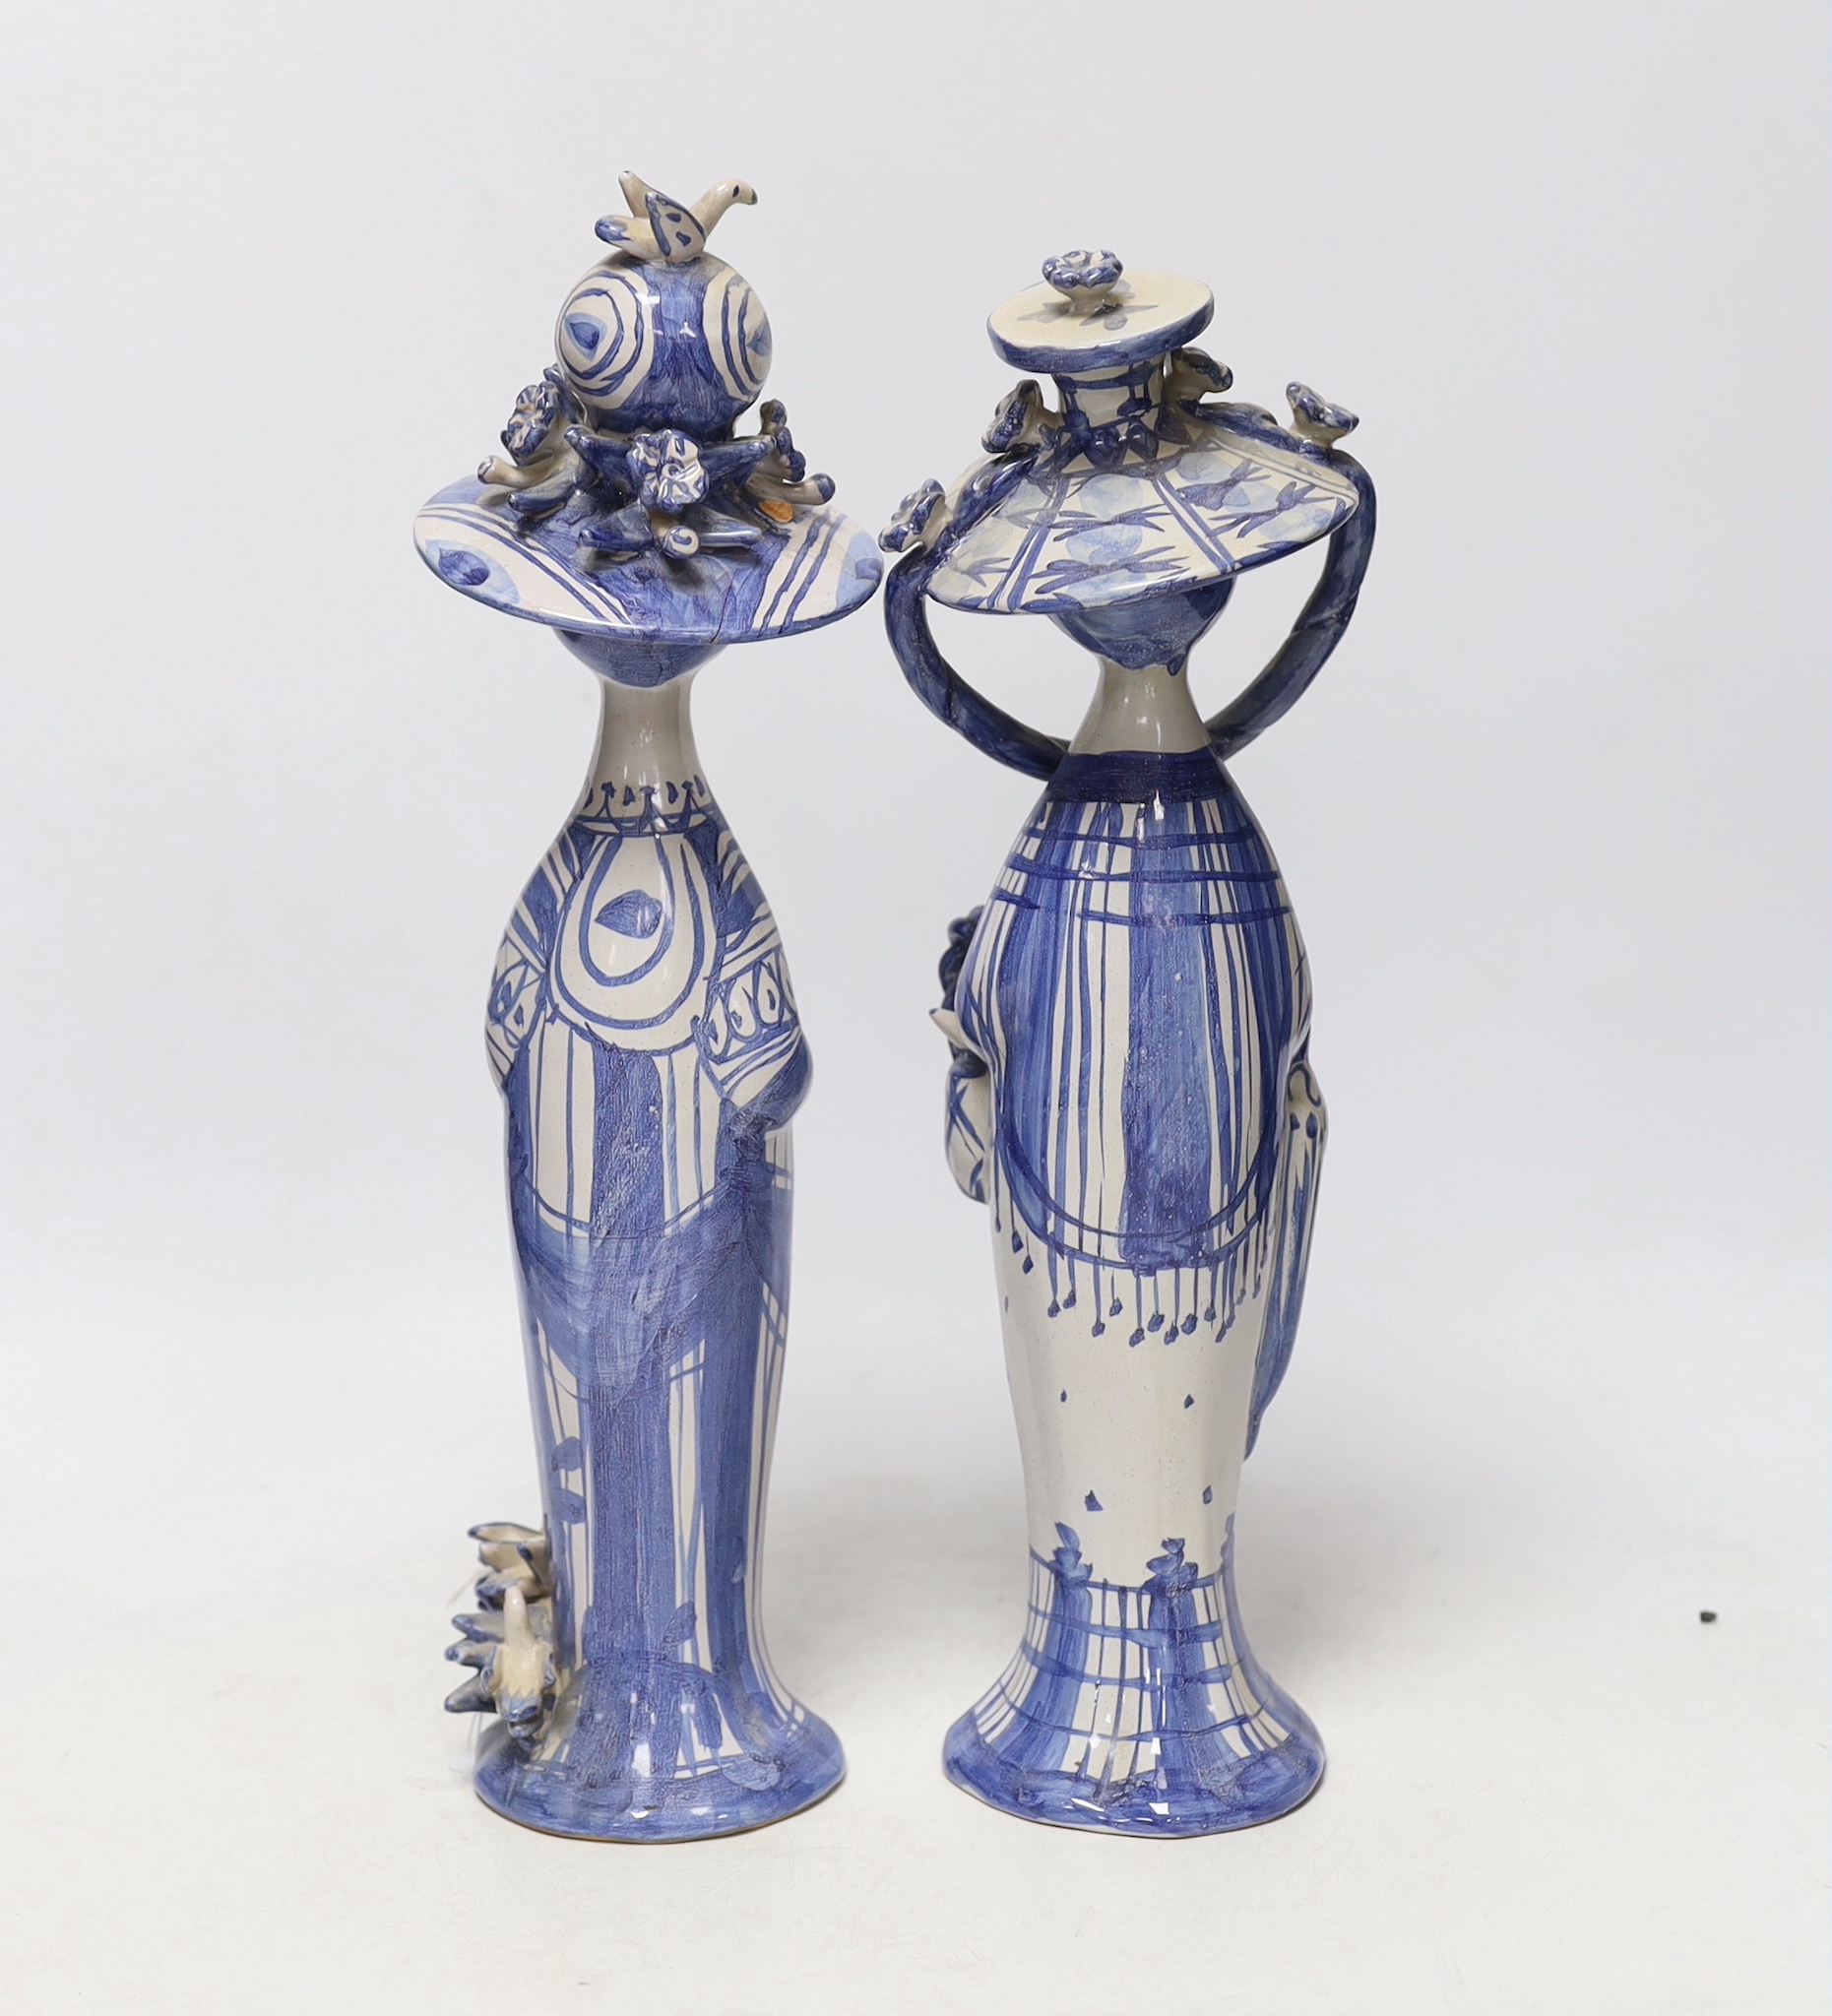 Two Bjørn Wiinblad, Denmark, blue and white ceramic female figures with large hats, 34.5cm